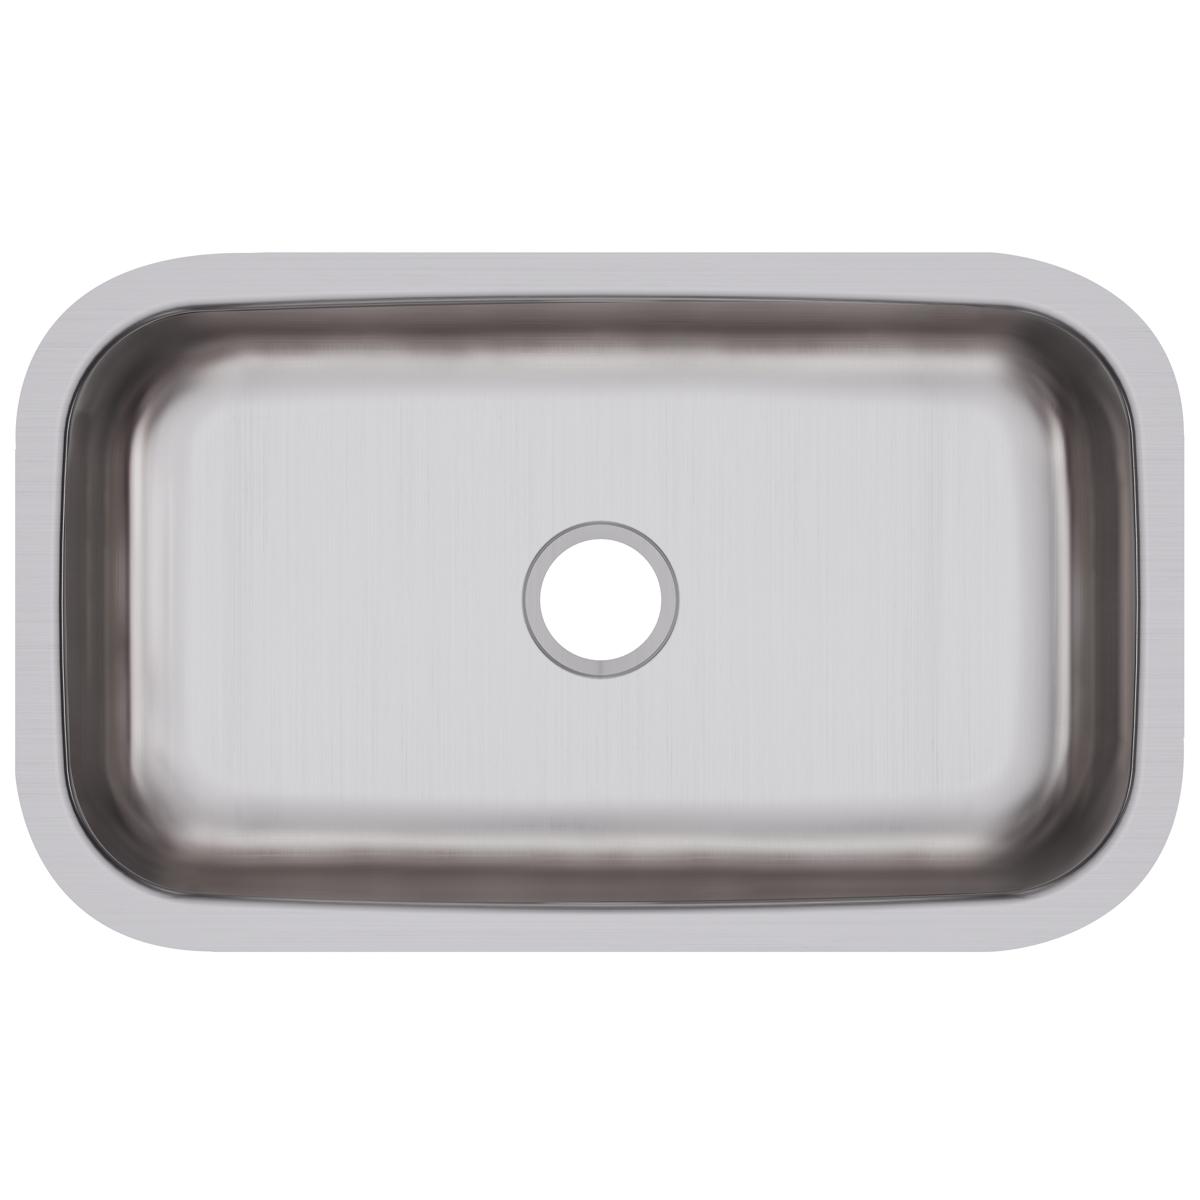 Elkay Dayton Stainless Steel 30-1/2" x 18-1/4" x 8" Single Bowl Undermount Sink